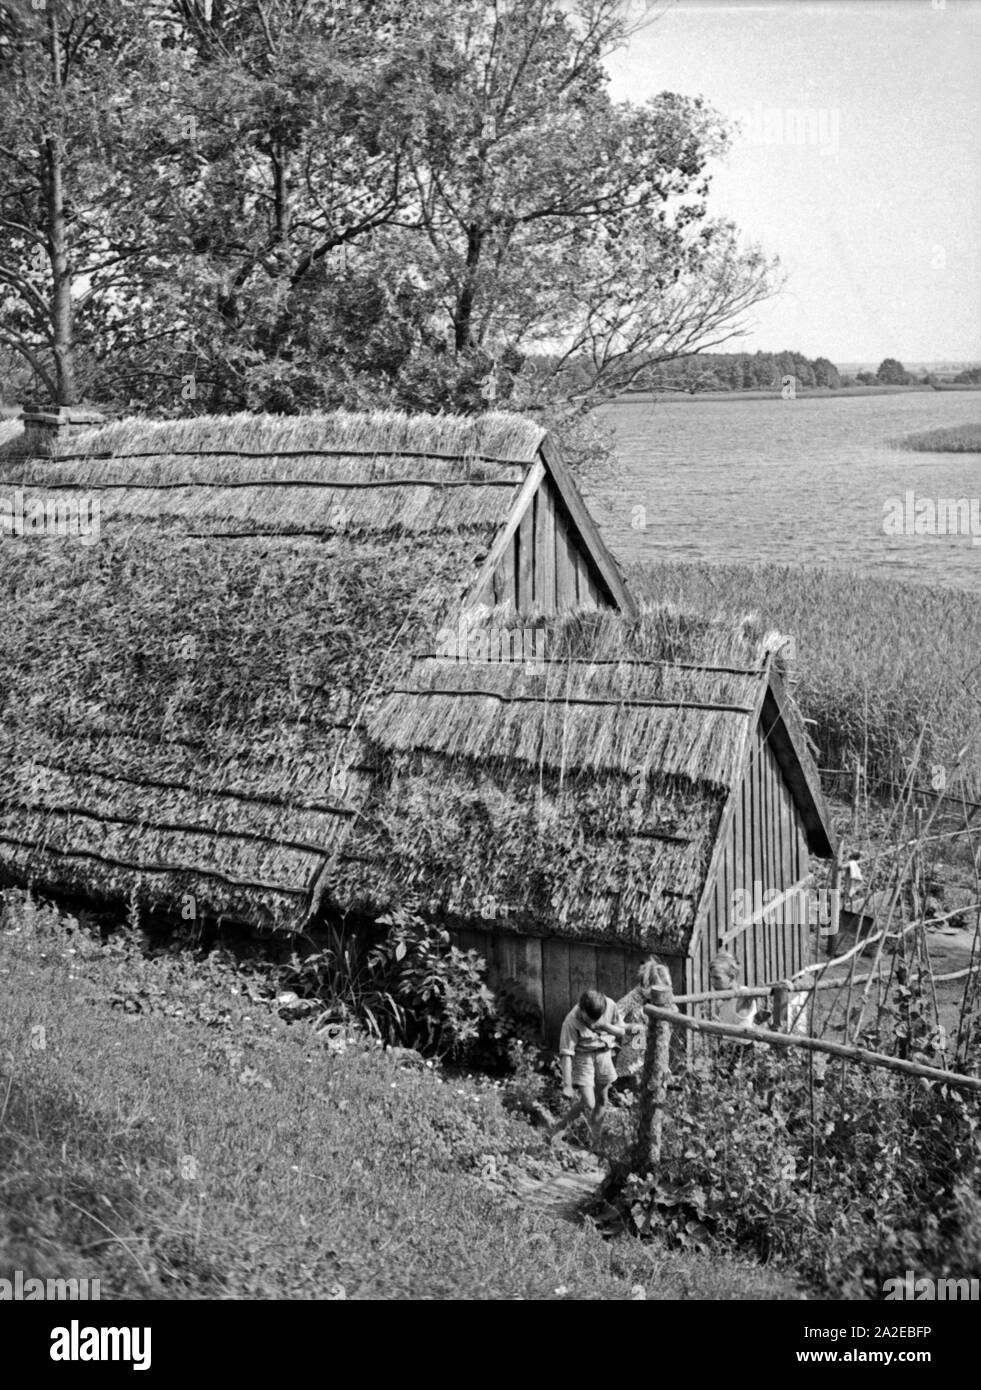 Fischerhaus in Salpia am Krötensee in Masuren, Ostpreußen, 1930er Jahre. Fisherman's cottage at Salpia, shore of Kroetensee lake in Masuria, East Prussia, 1930s. Stock Photo